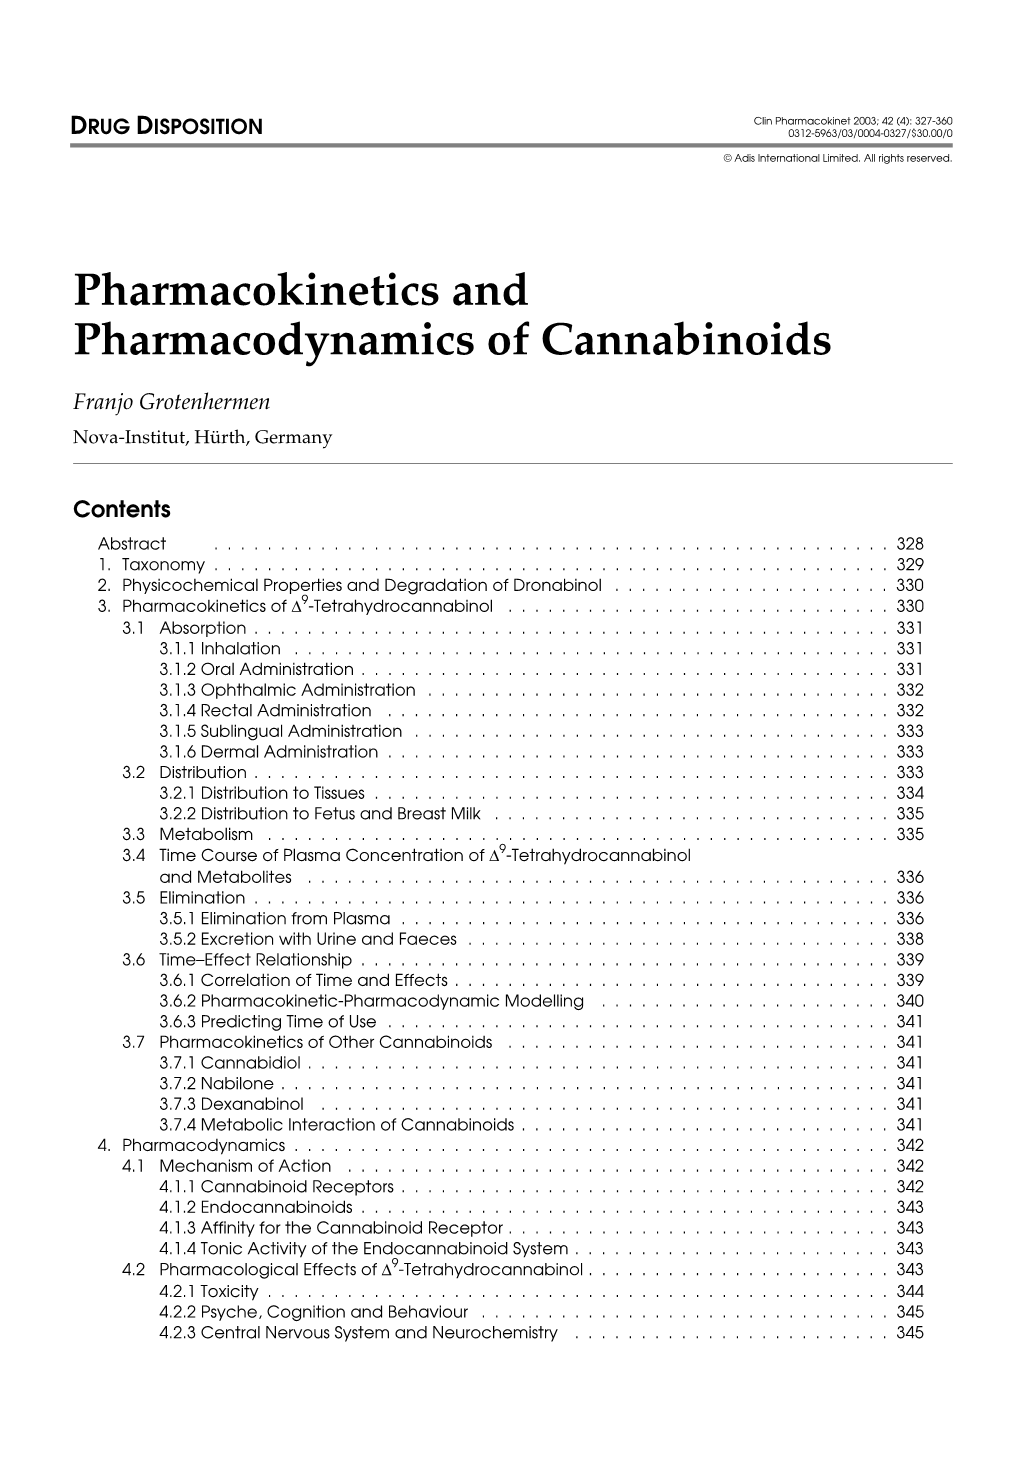 Pharmacokinetics and Pharmacodynamics of Cannabinoids